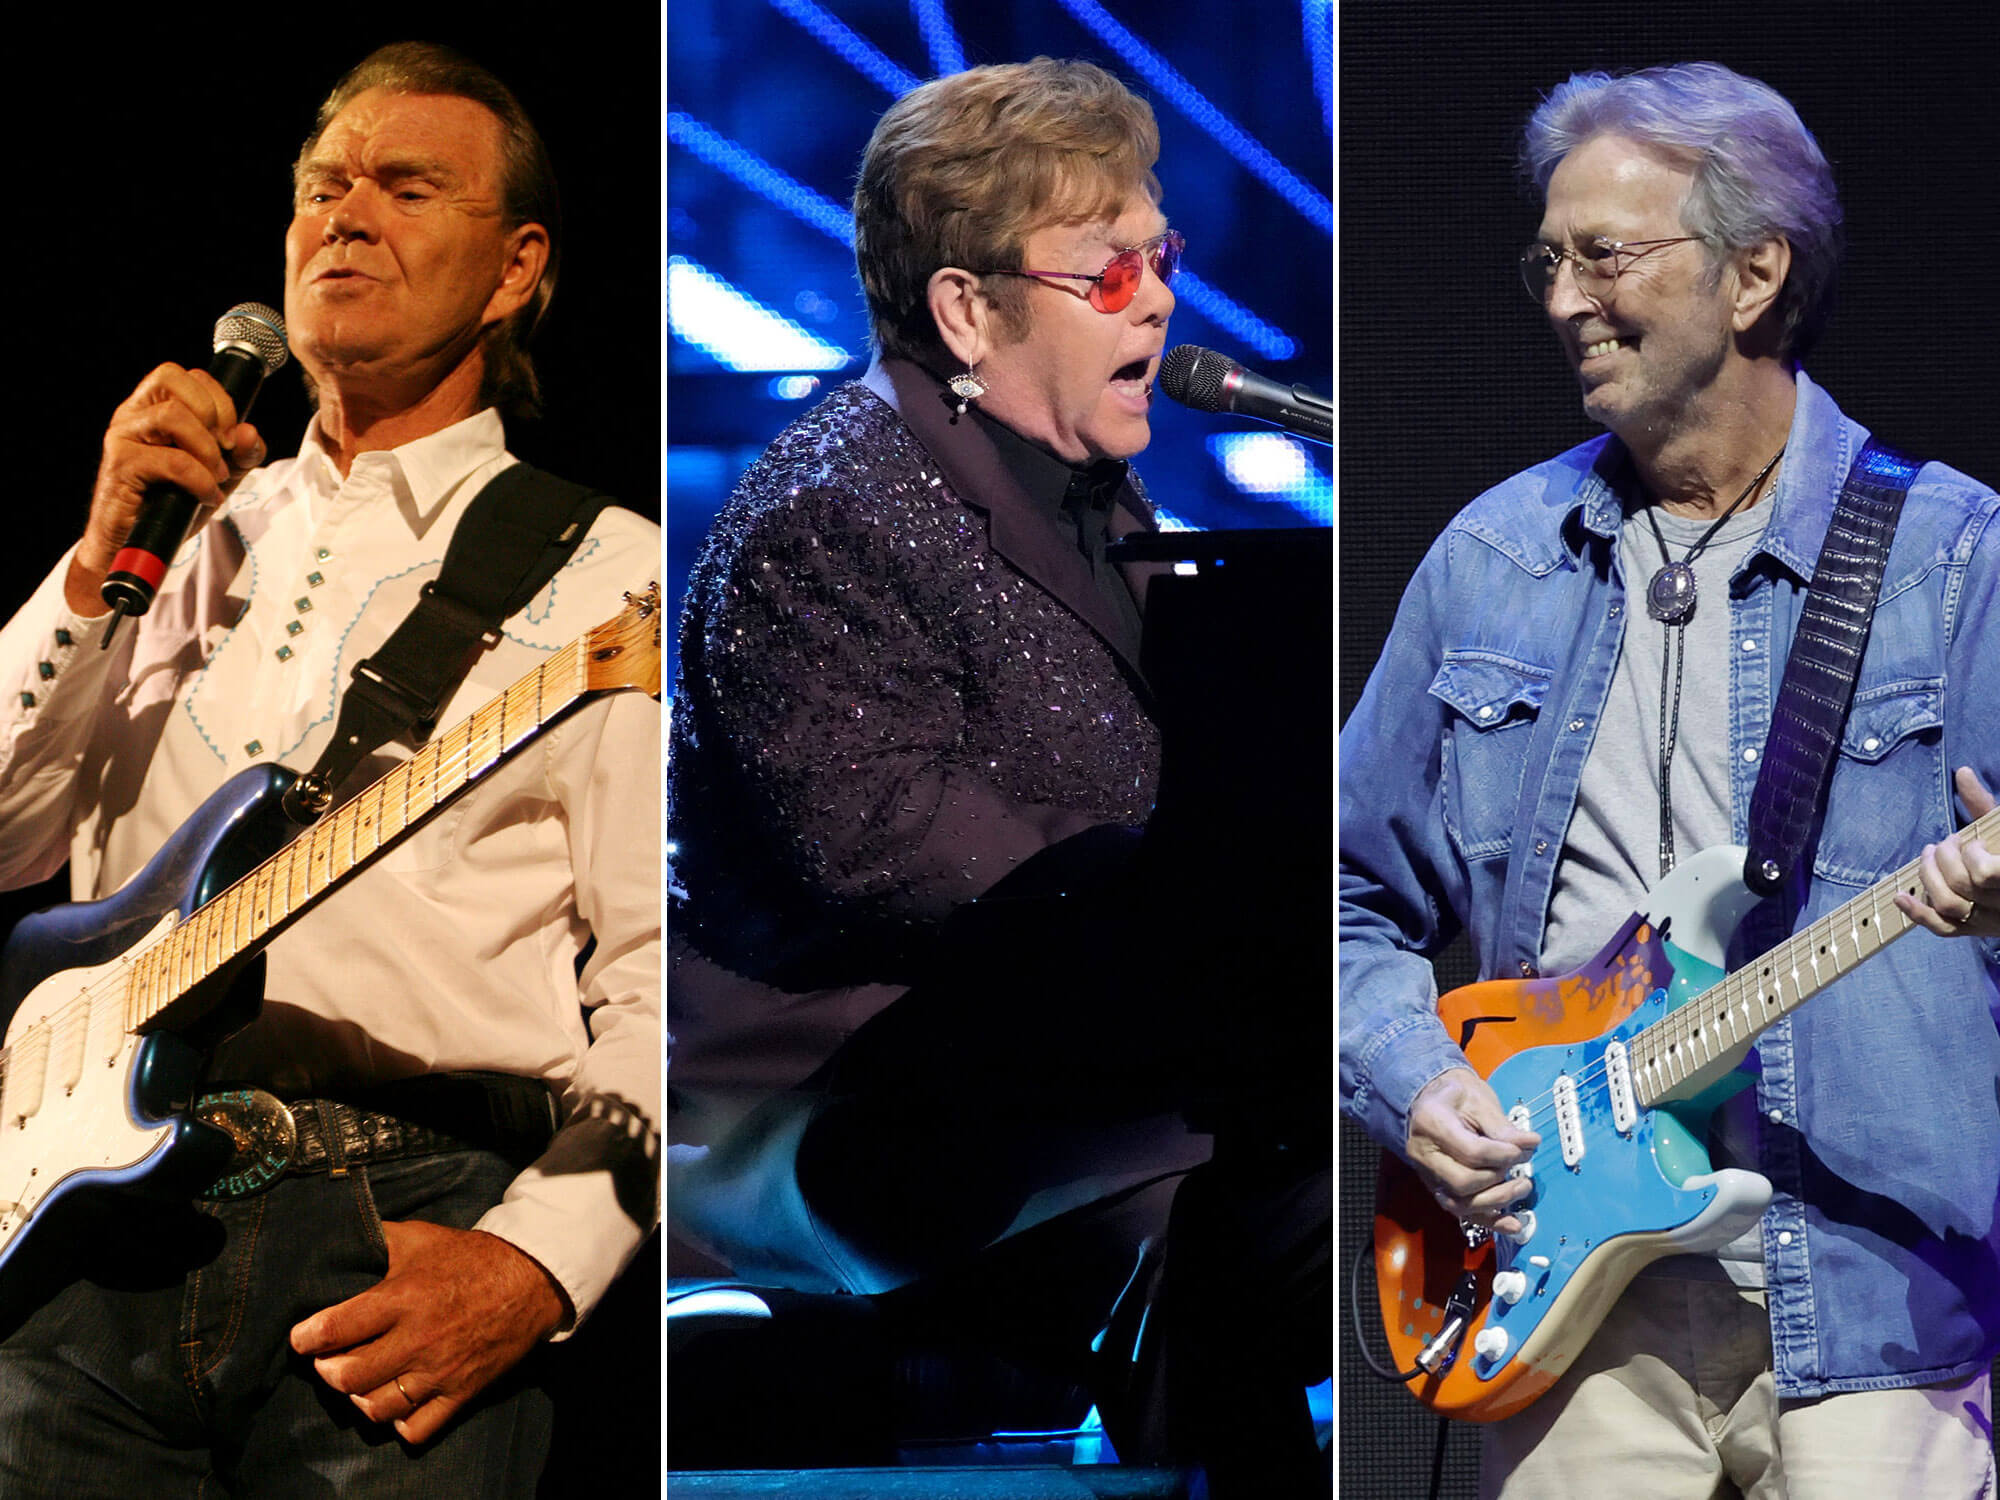 [L-R] Glen Campbell, Elton John and Eric Clapton